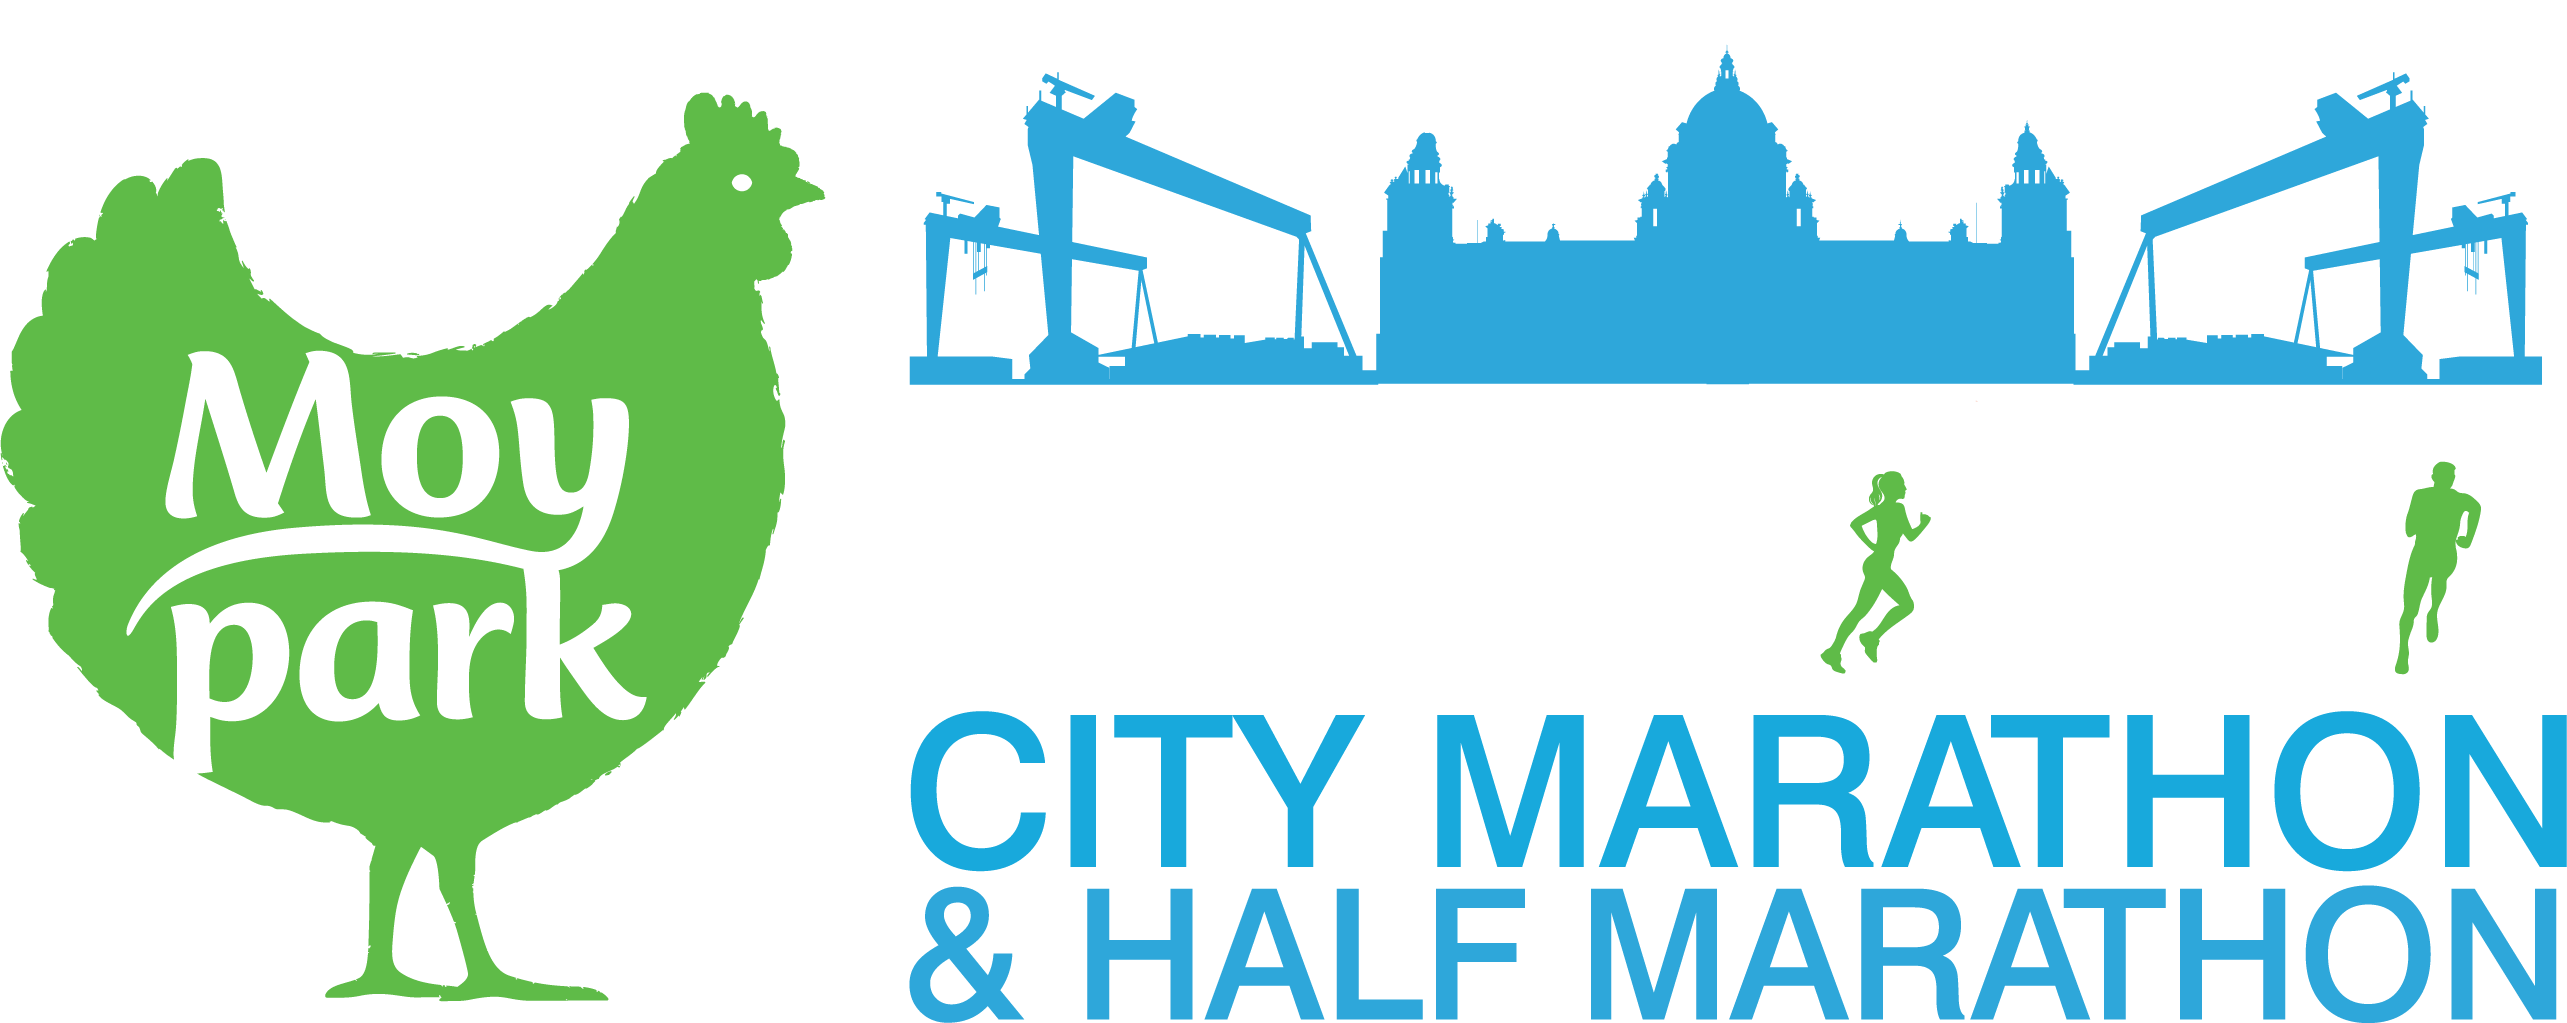 Belfast City Marathon logo on RaceRaves